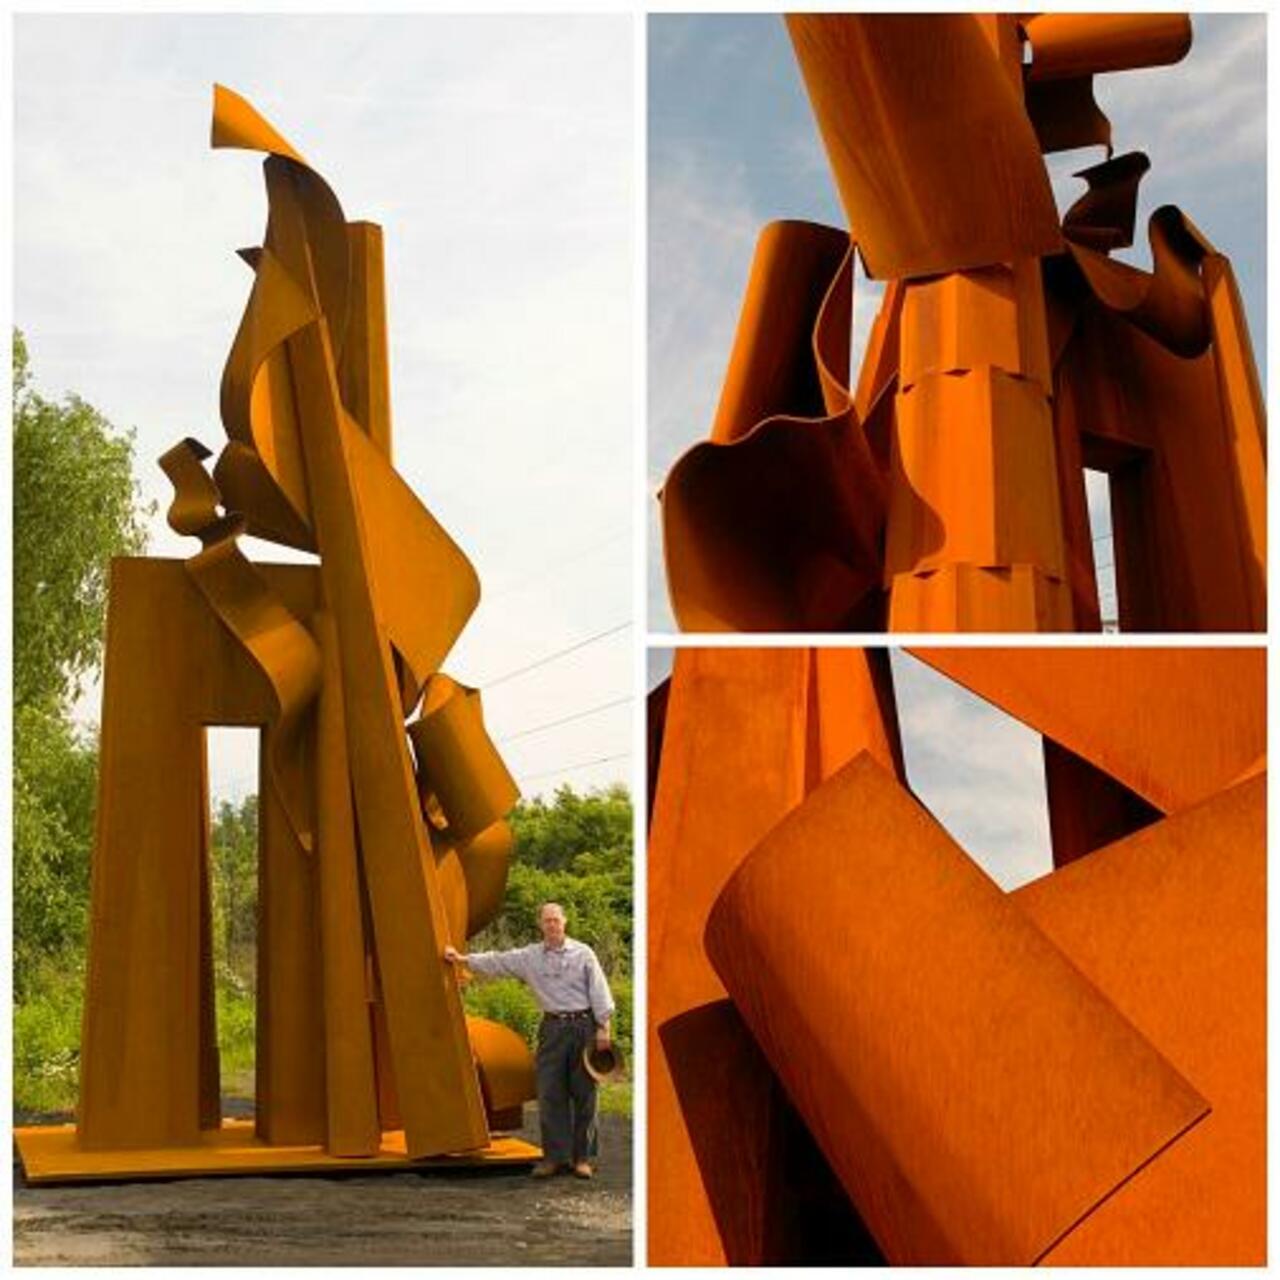 Portal, weathering steel, 2005, 30 feet tall #publicart #sculpture http://t.co/Ktg6GLAokc